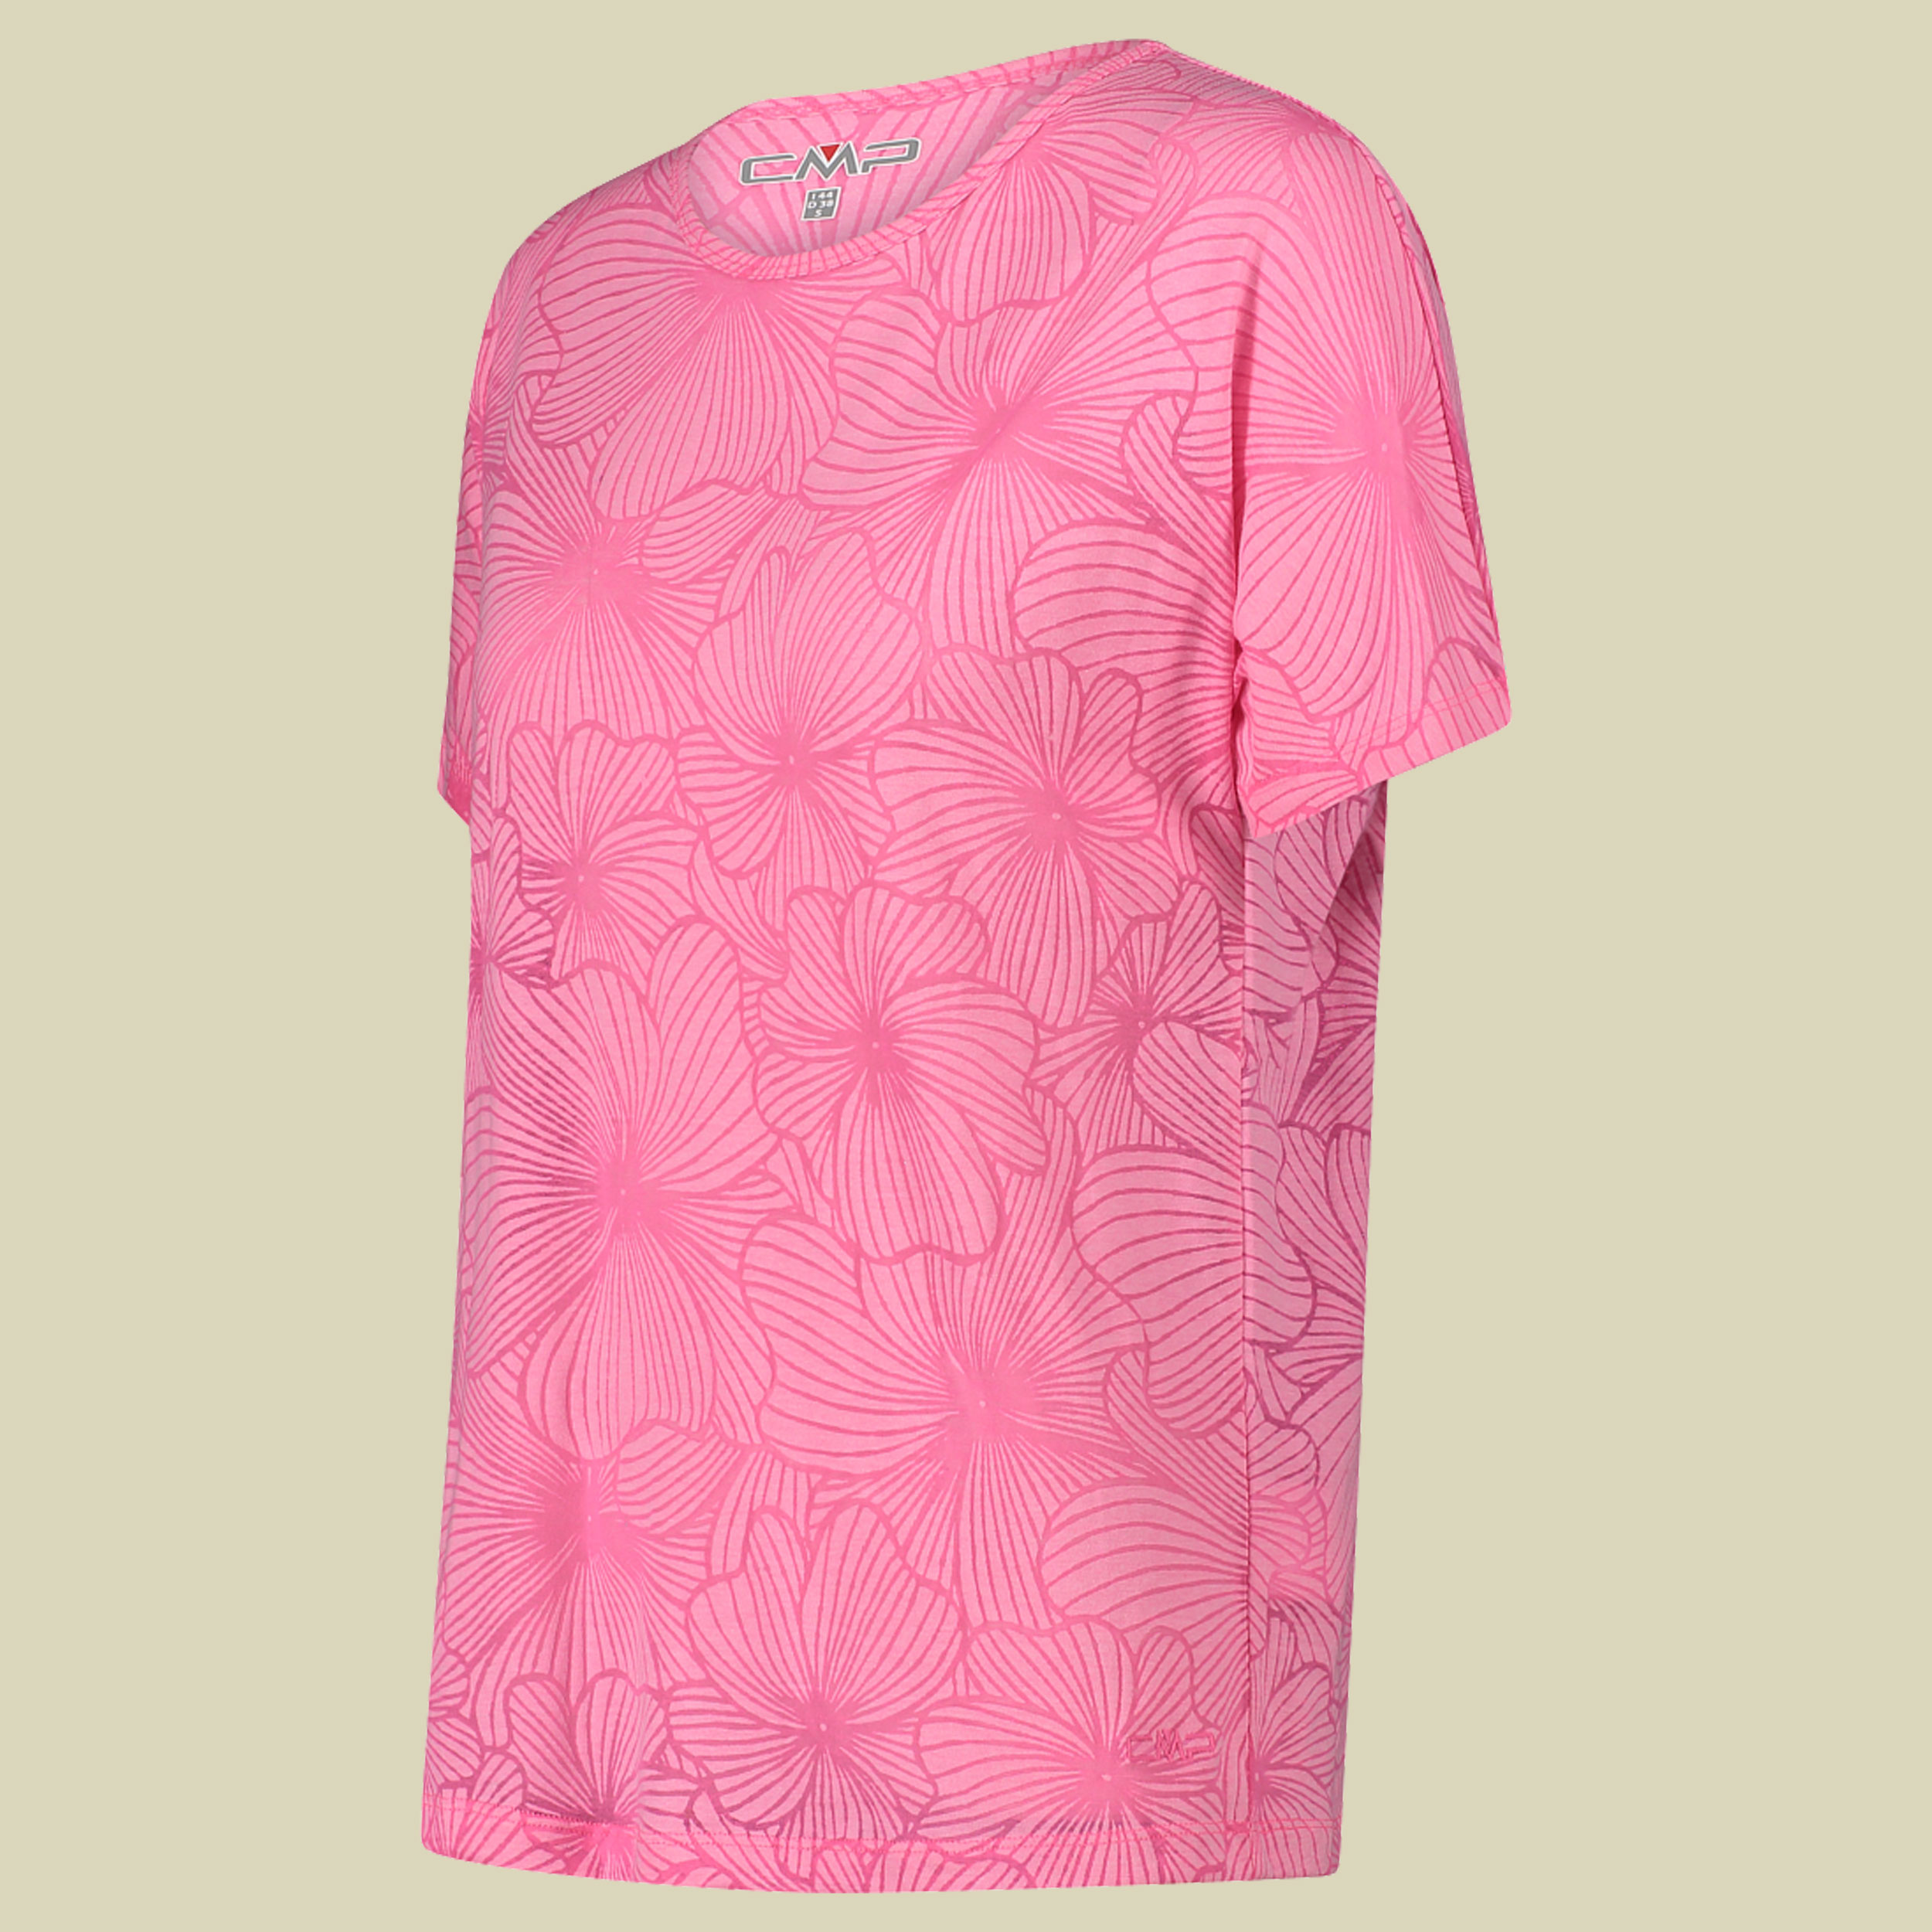 Woman T-Shirt Burn Out Jersey 33N7976 Größe 42 Farbe B351 pink fluo